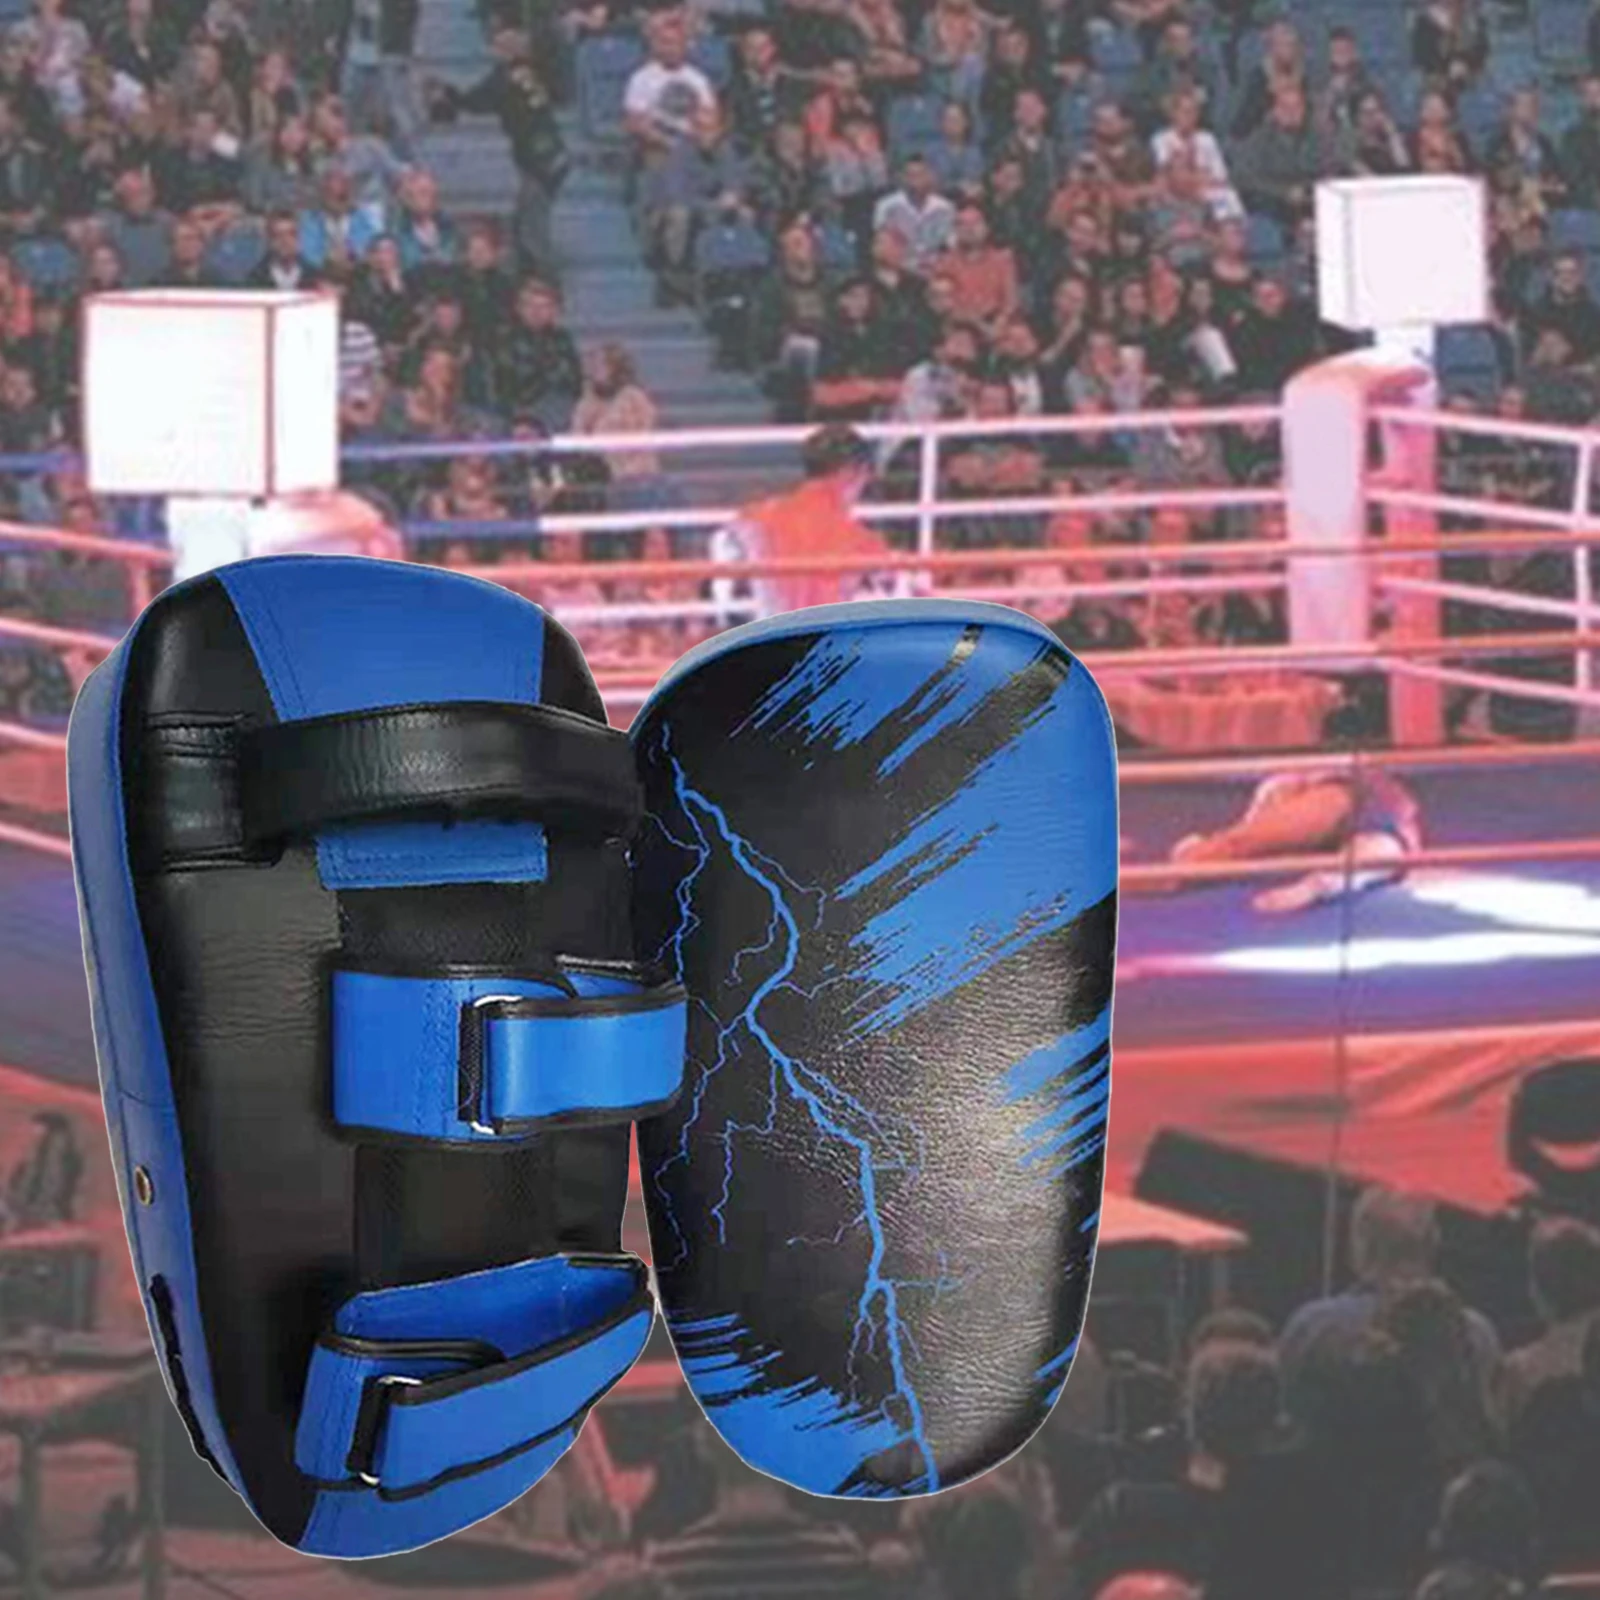 Kicking Strike Shield Boxing/Low Kick Target Pad  Gloves for MMA Karate Sanda Free Fight Sports Entertainment Gym Training